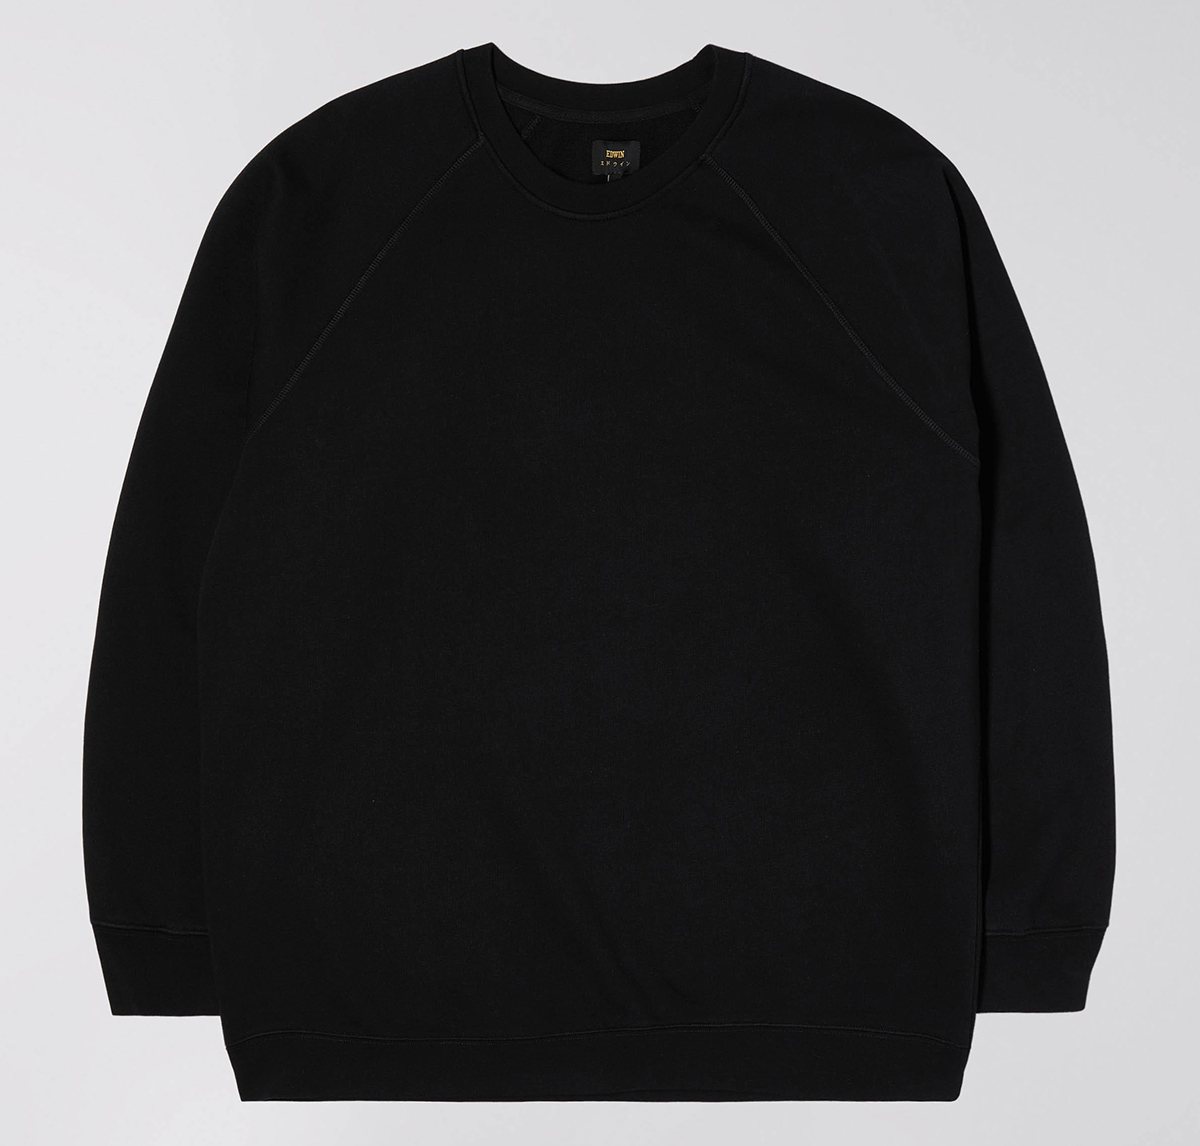 EDWIN x TEIDE - Panther Sweater - Black front flat